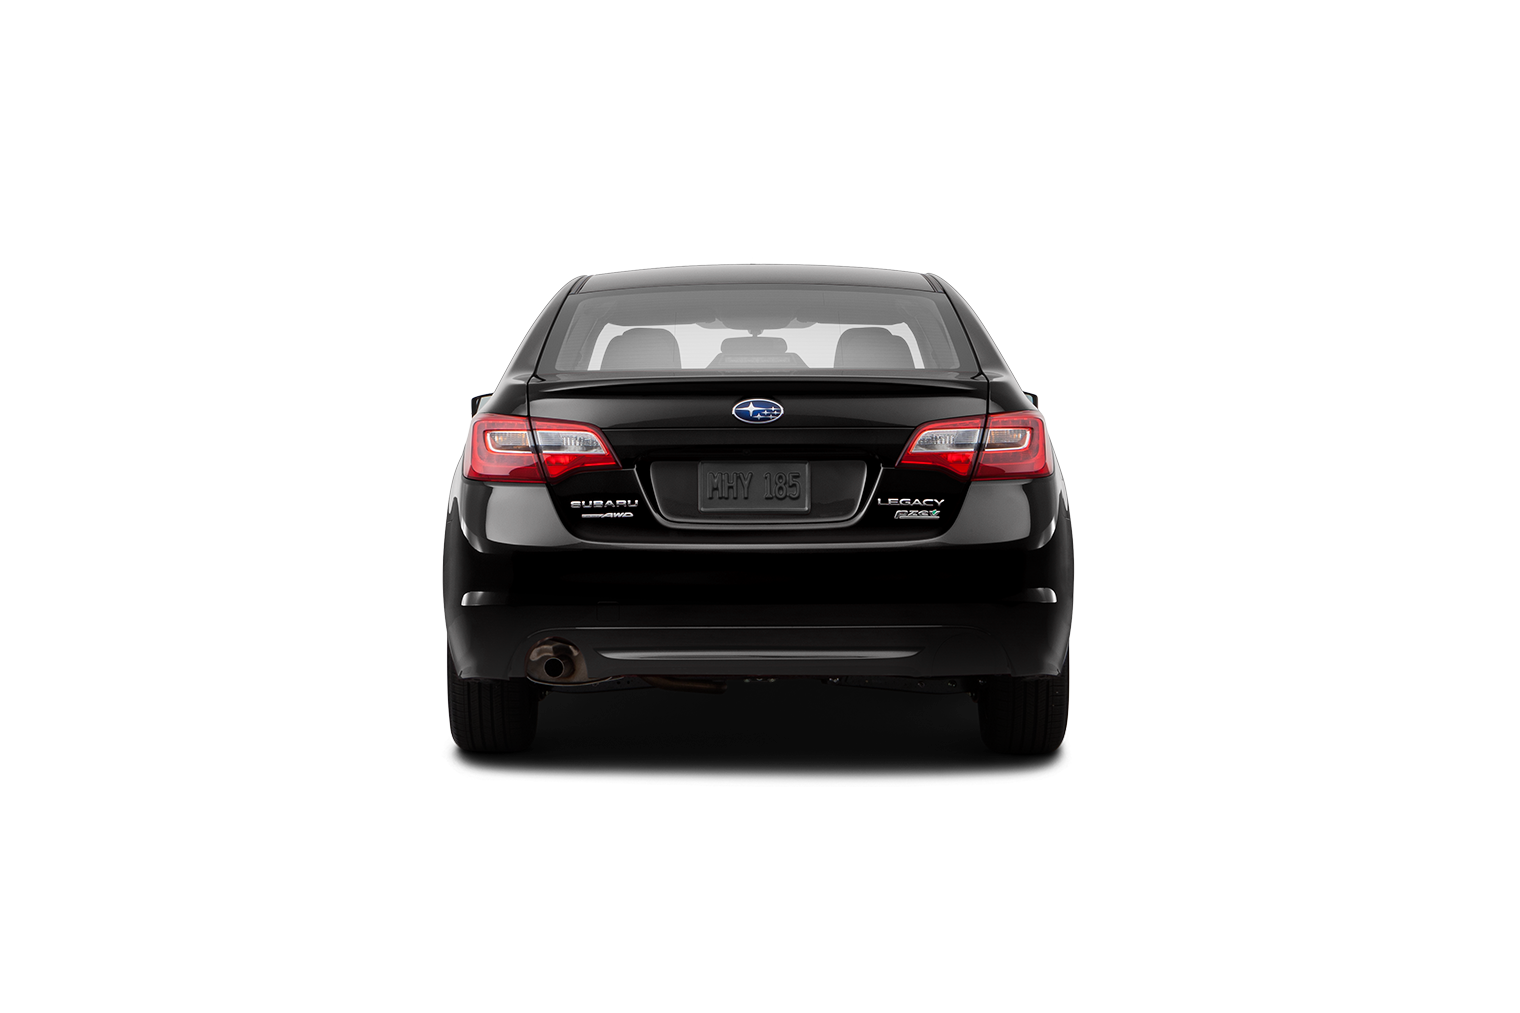 Subaru Legacy 2.5i rear view